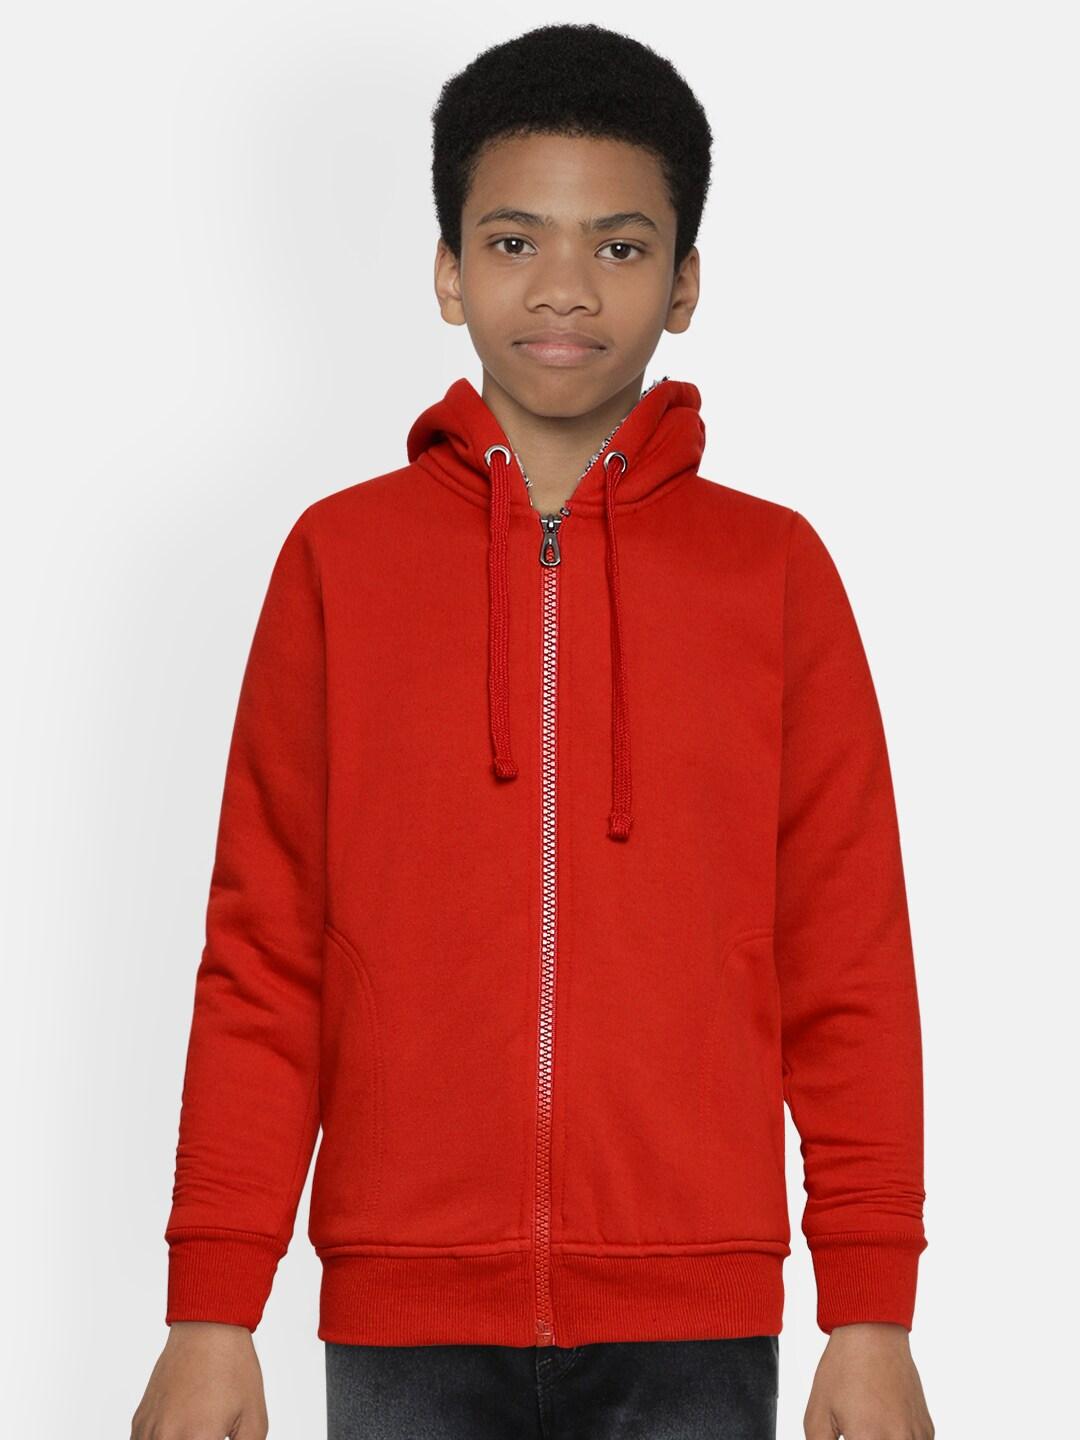 ADBUCKS Boys Red Solid Hooded Sweatshirt